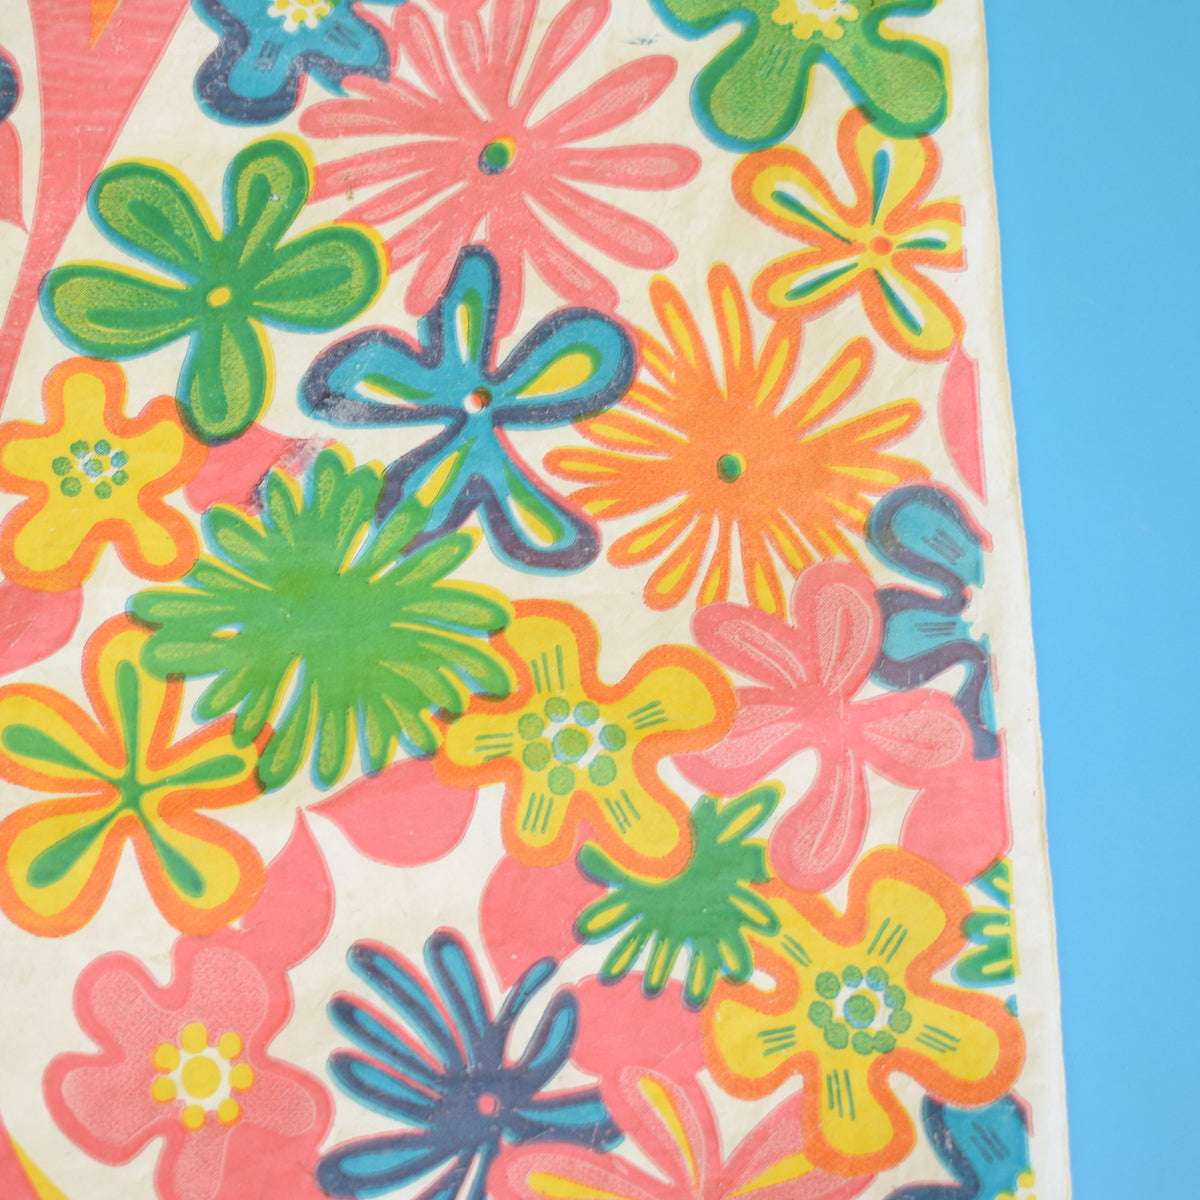 Vintage 1970s Paper / Plastic Gift Bag - Coloroll Ltd -  Flower Power